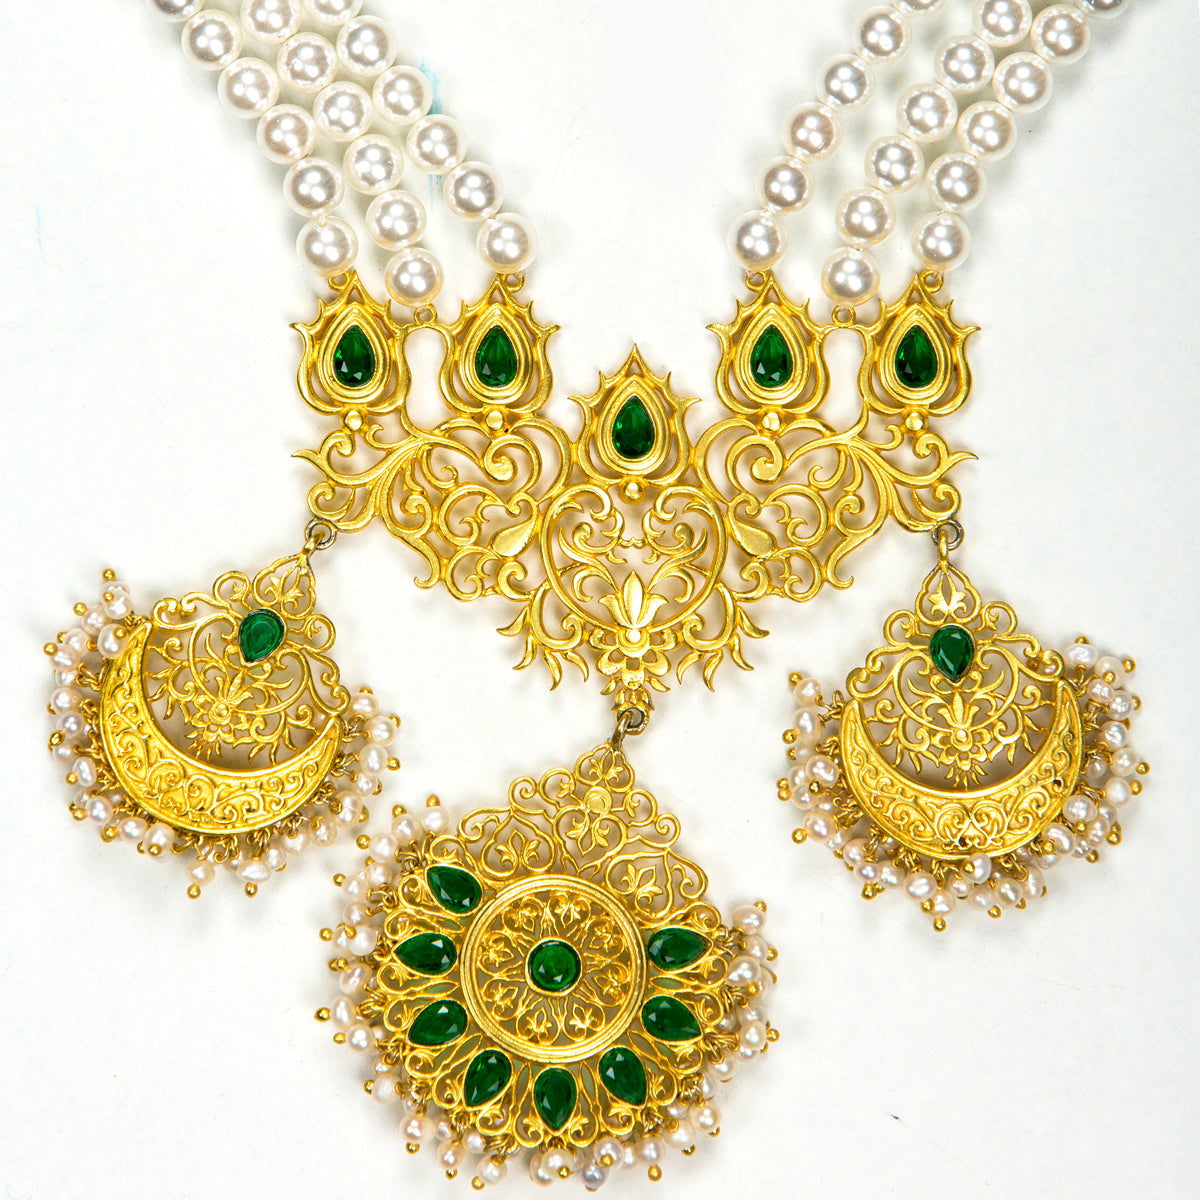 Rukhsaar necklace